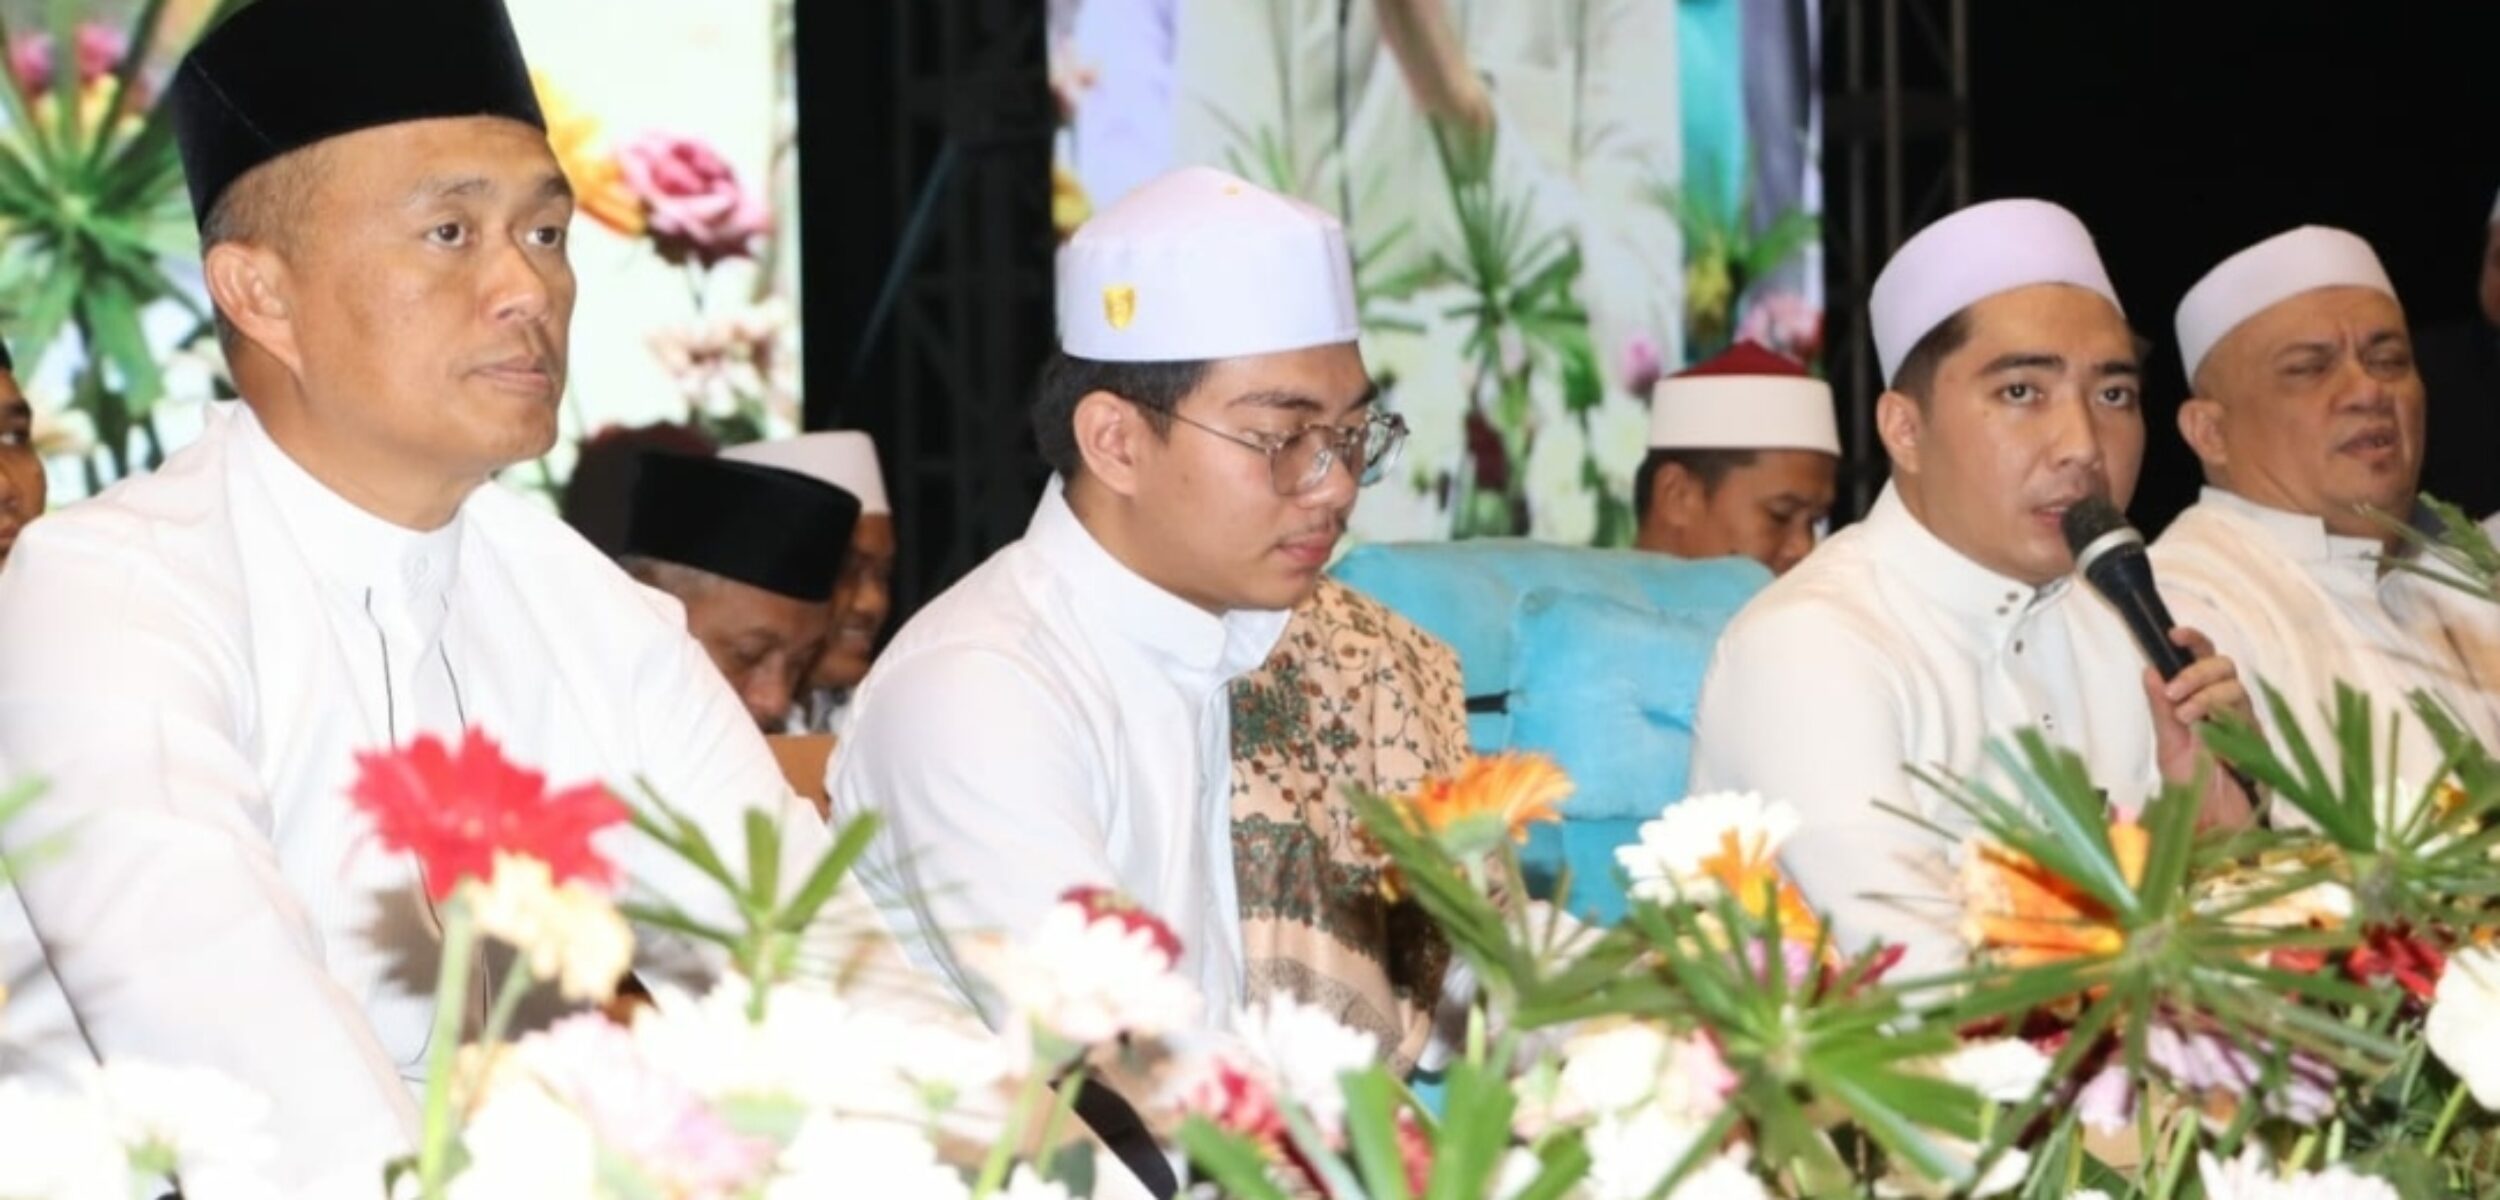 Kapolda Jatim Irjen Pol. Drs. Imam Sugianto, M.Si saat menghadiri Haul ke-10 KH. Abdurrochim bin Achmad Syadzily. (Yan/kabarerdepan.com)